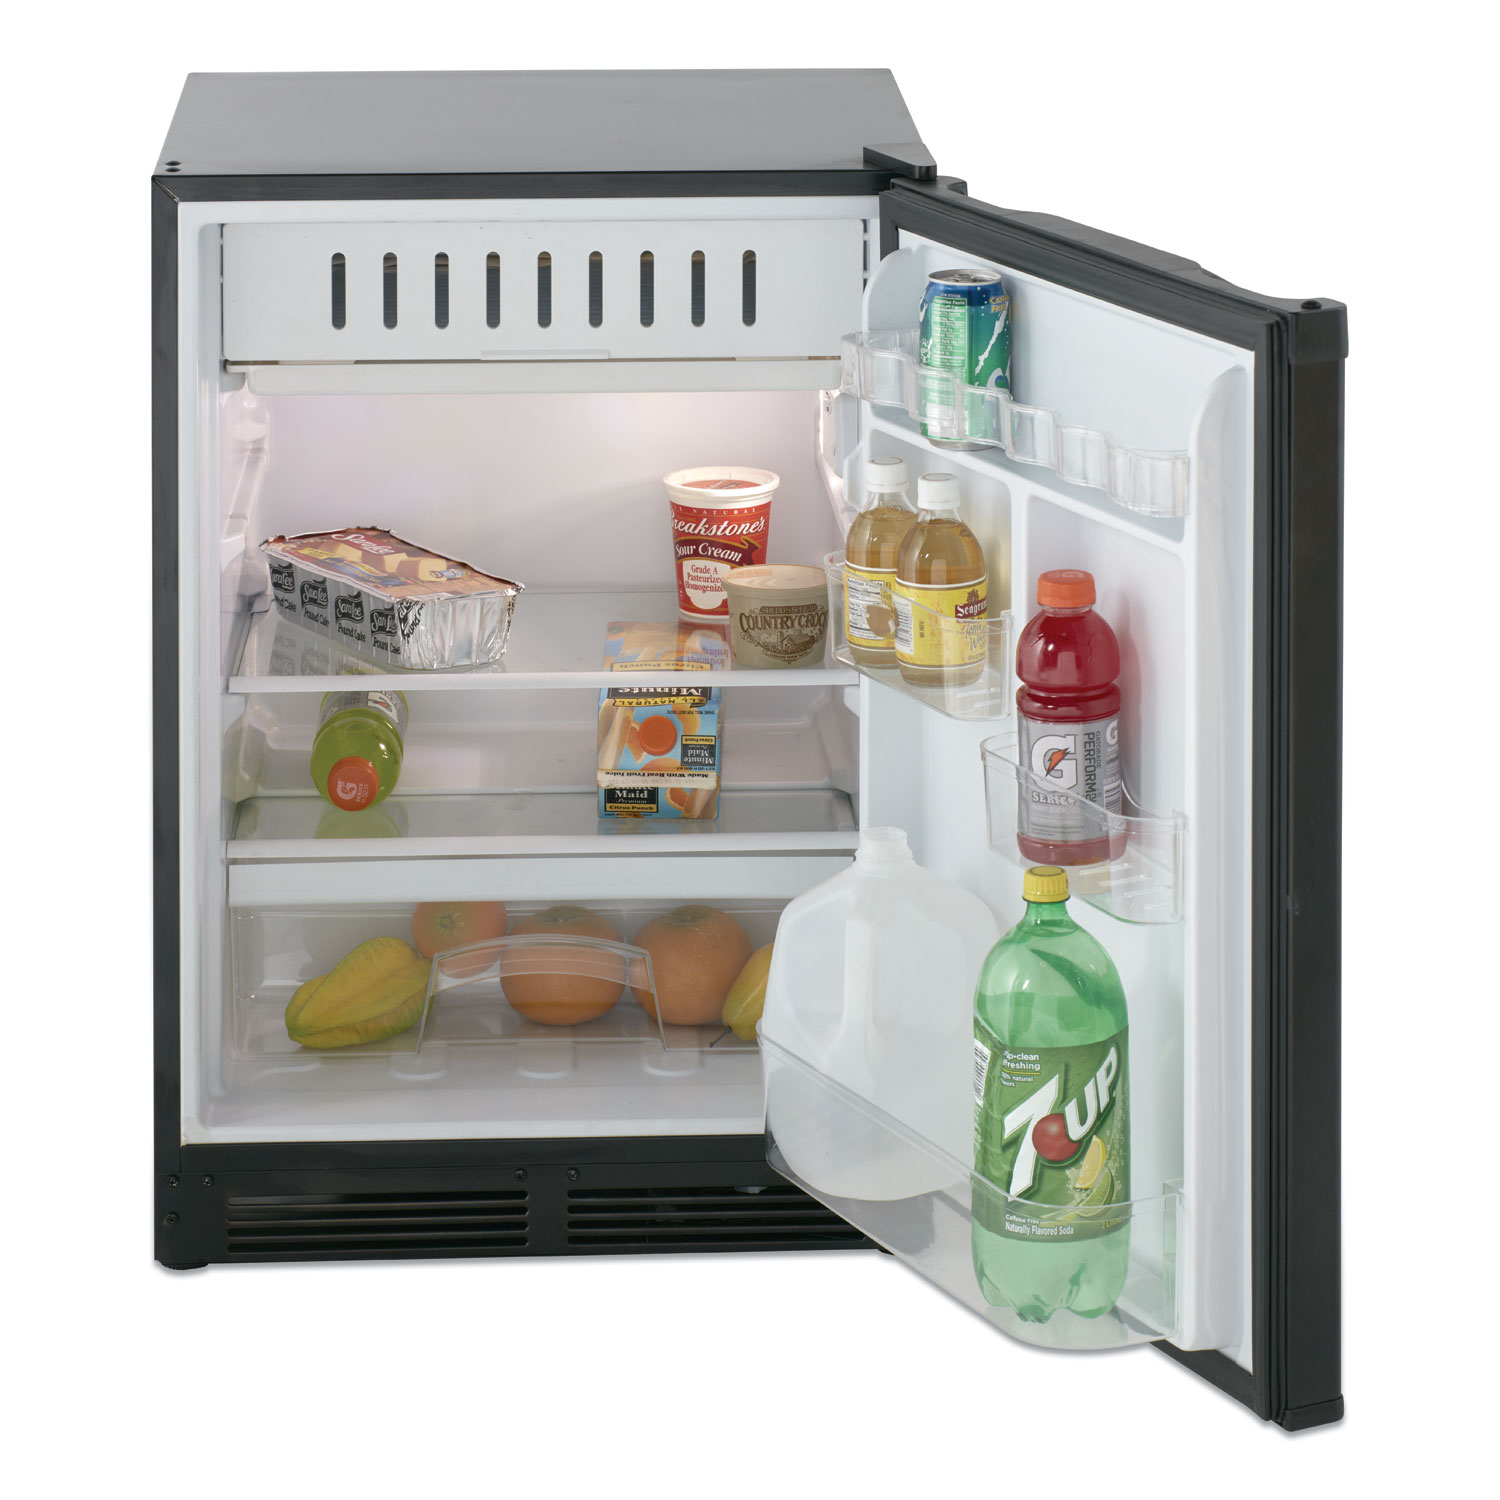  Avanti RM52T1BB 5.2 Cu. Ft. Counter Height Refrigerator, Black (AVA2728230) 